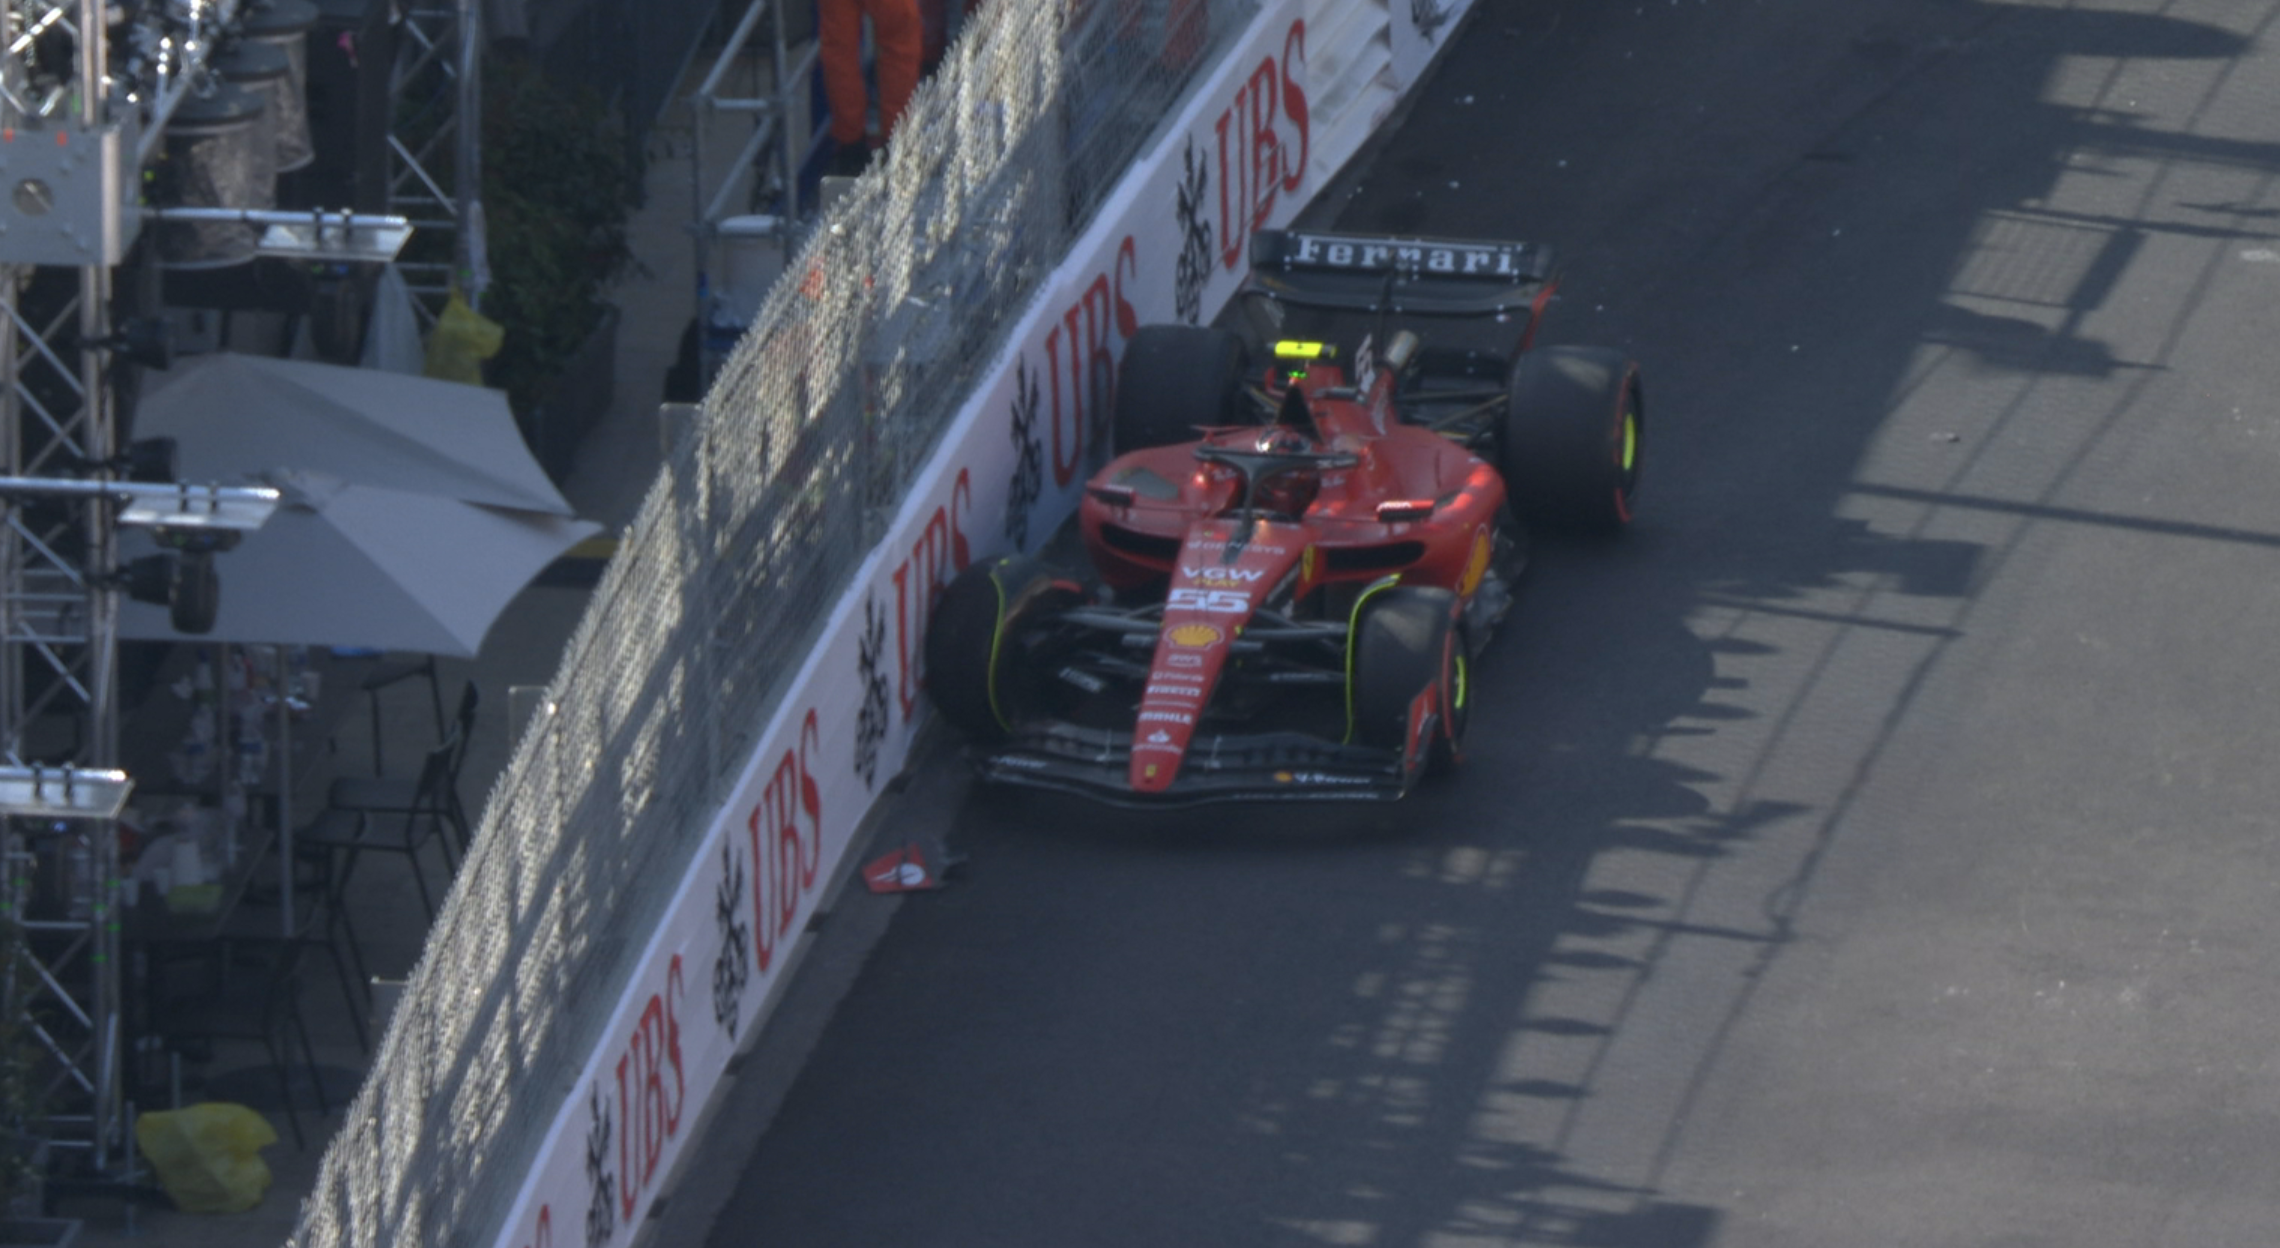 F1 LIVE Monaco Grand Prix Lewis Hamilton and Max Verstappen in first practice - Live